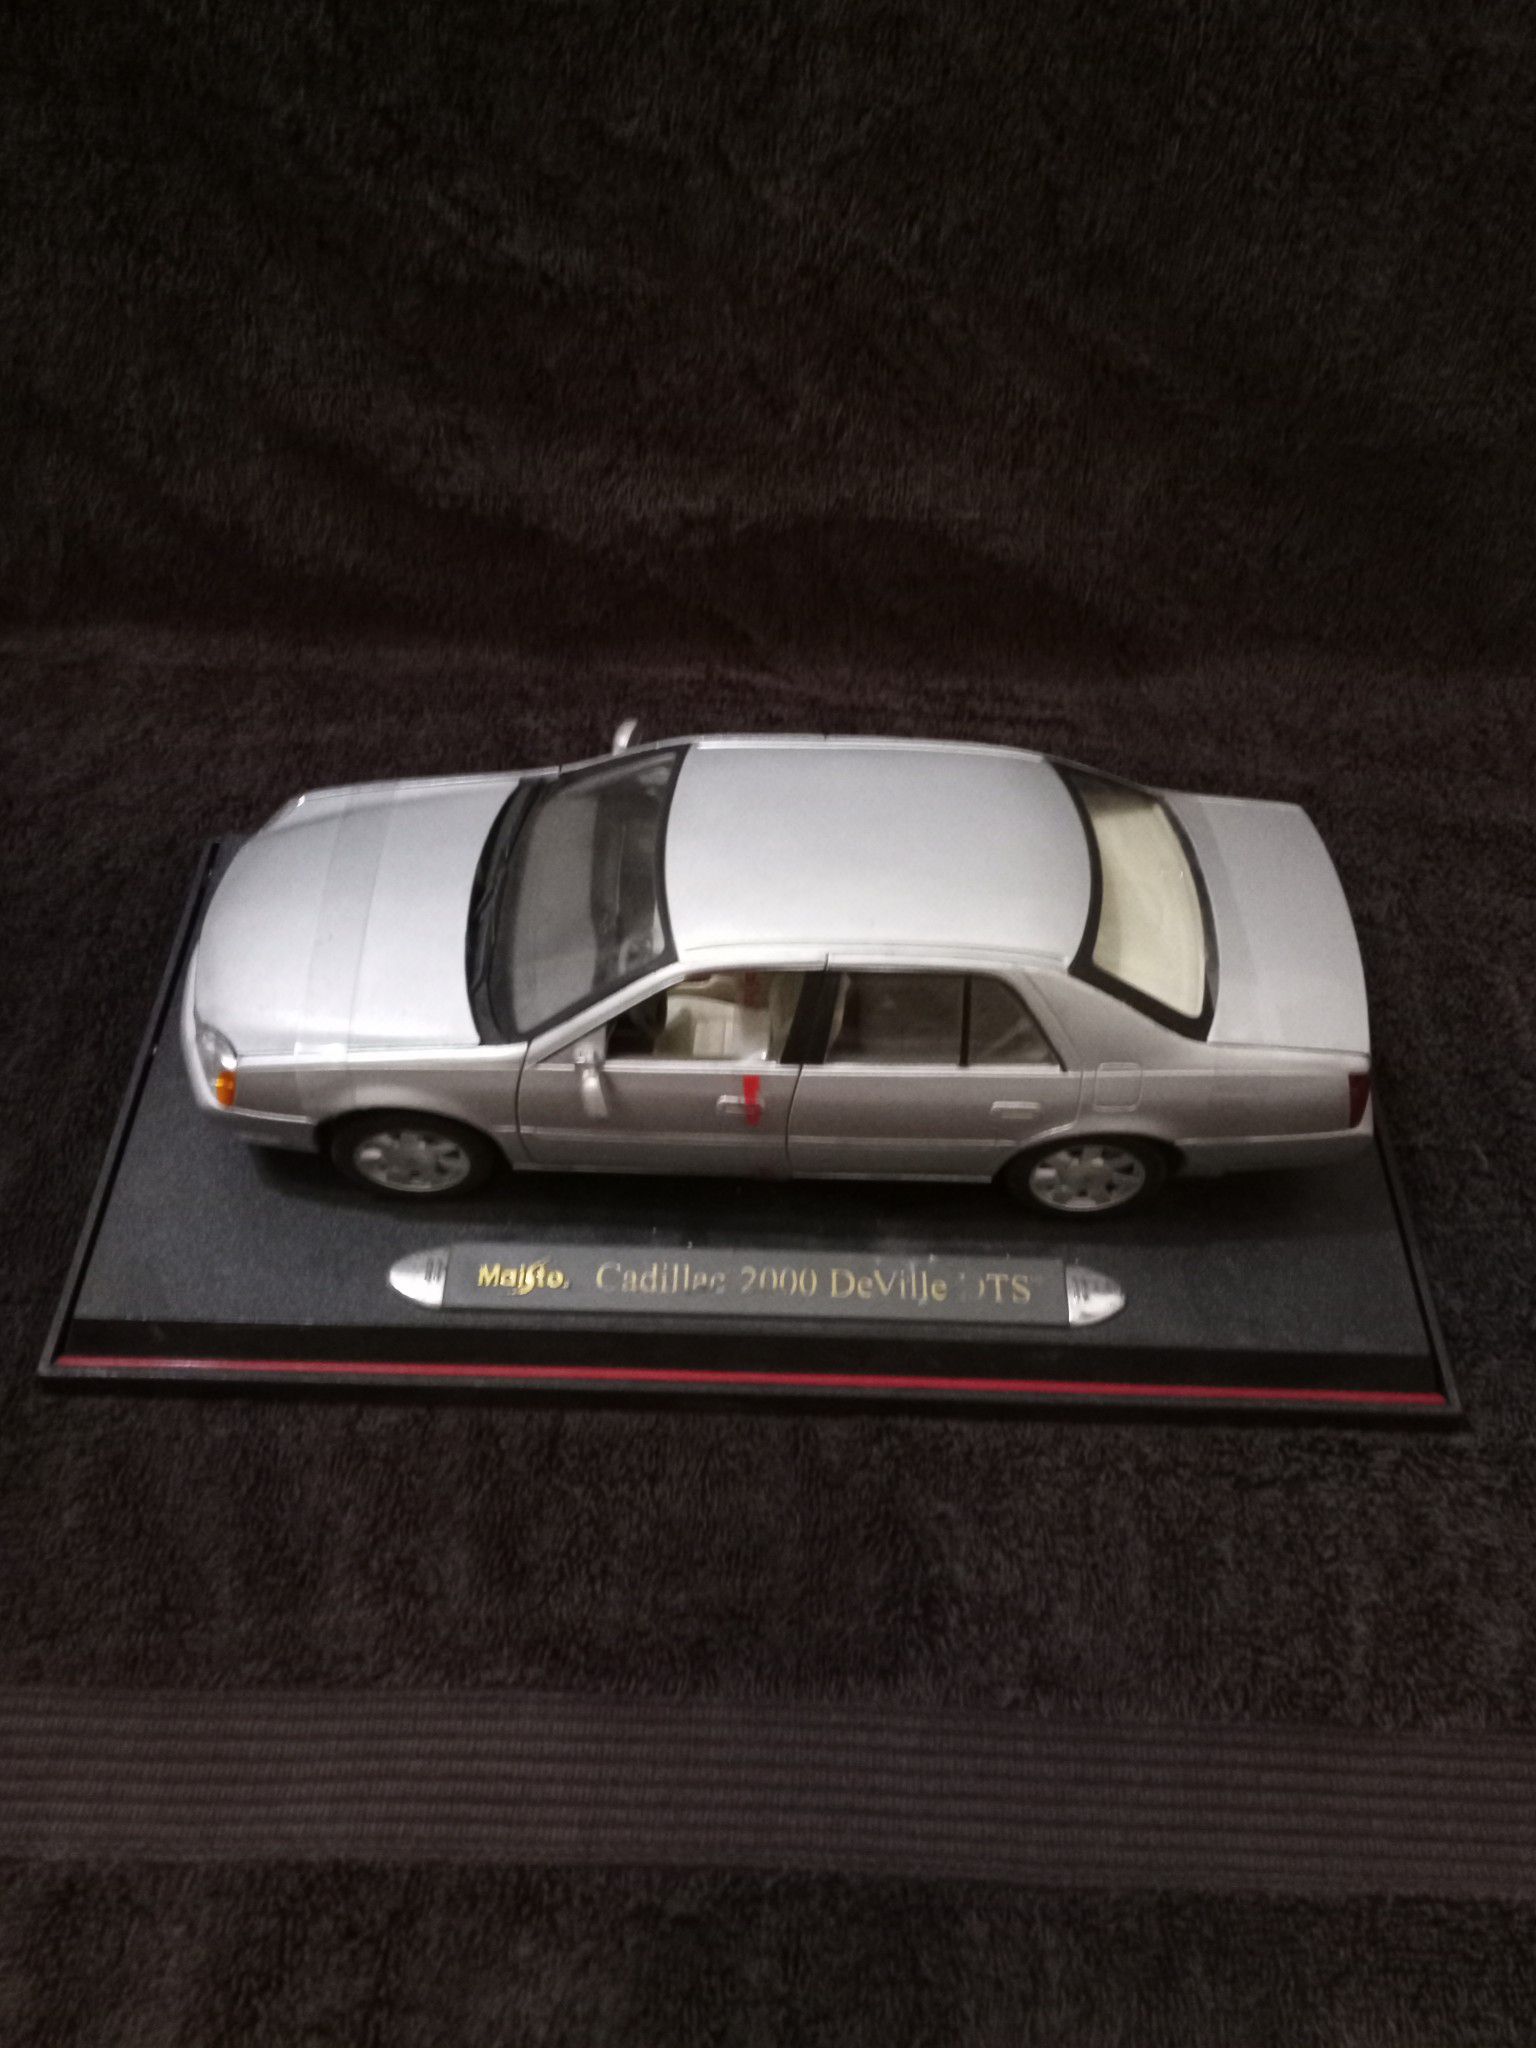 CADILLAC 2000 DeVILLE DTS model car